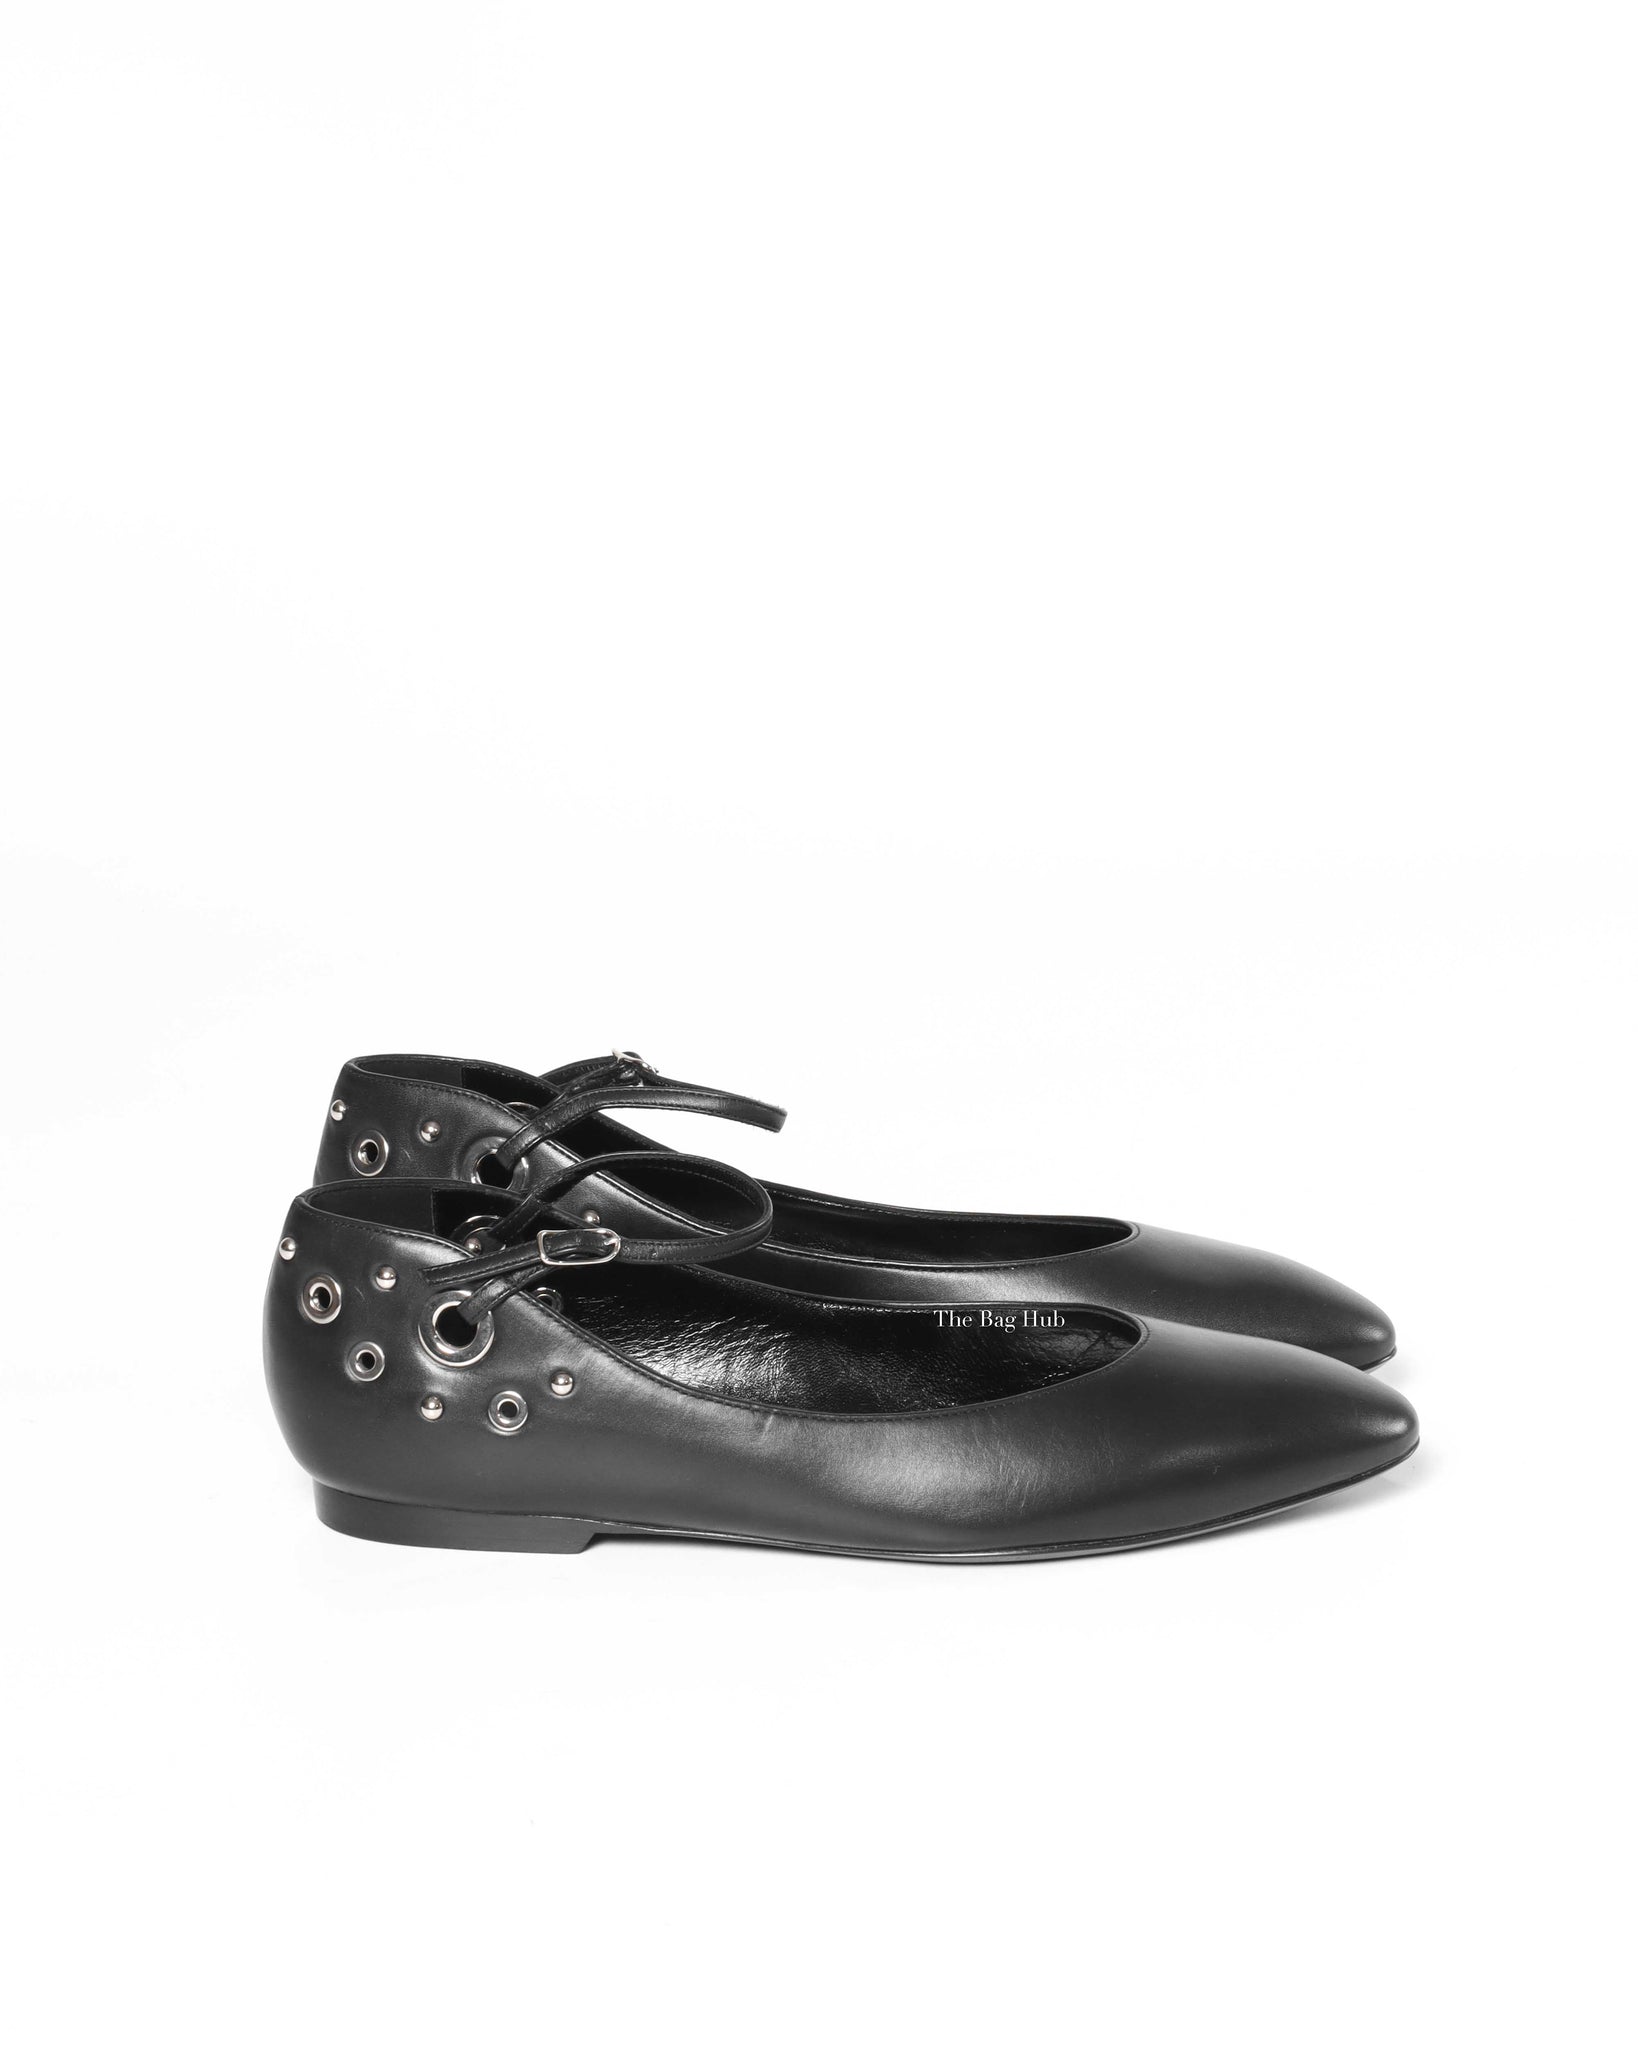 Hermes Black Leather Pepite Flats Size 39-4